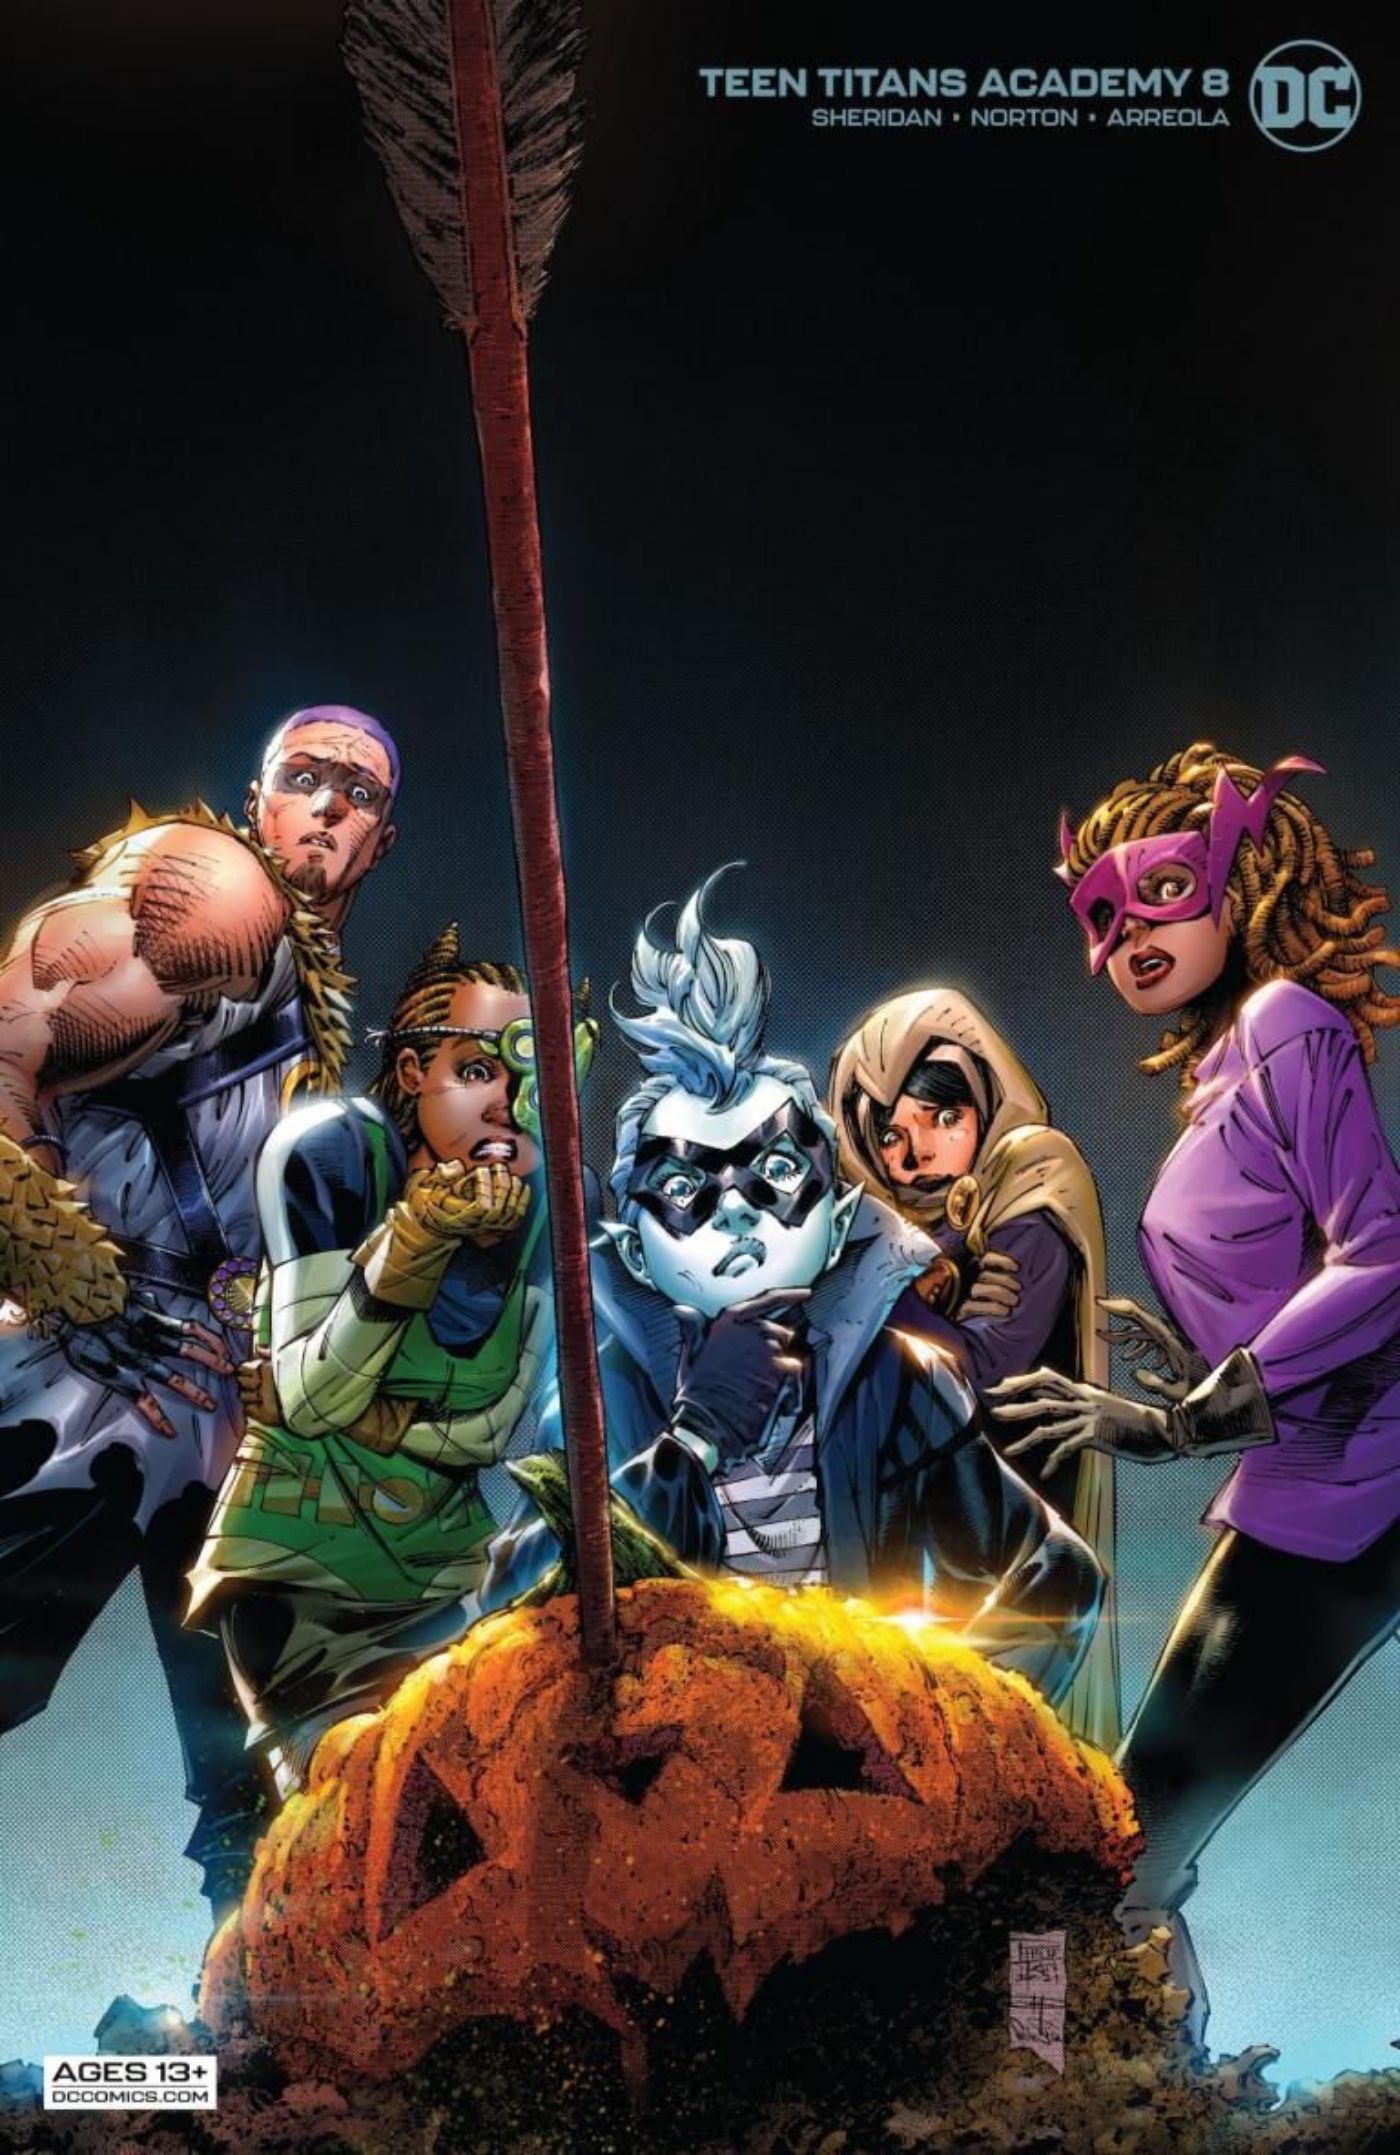 Teen Titans Academy 8 variant cover